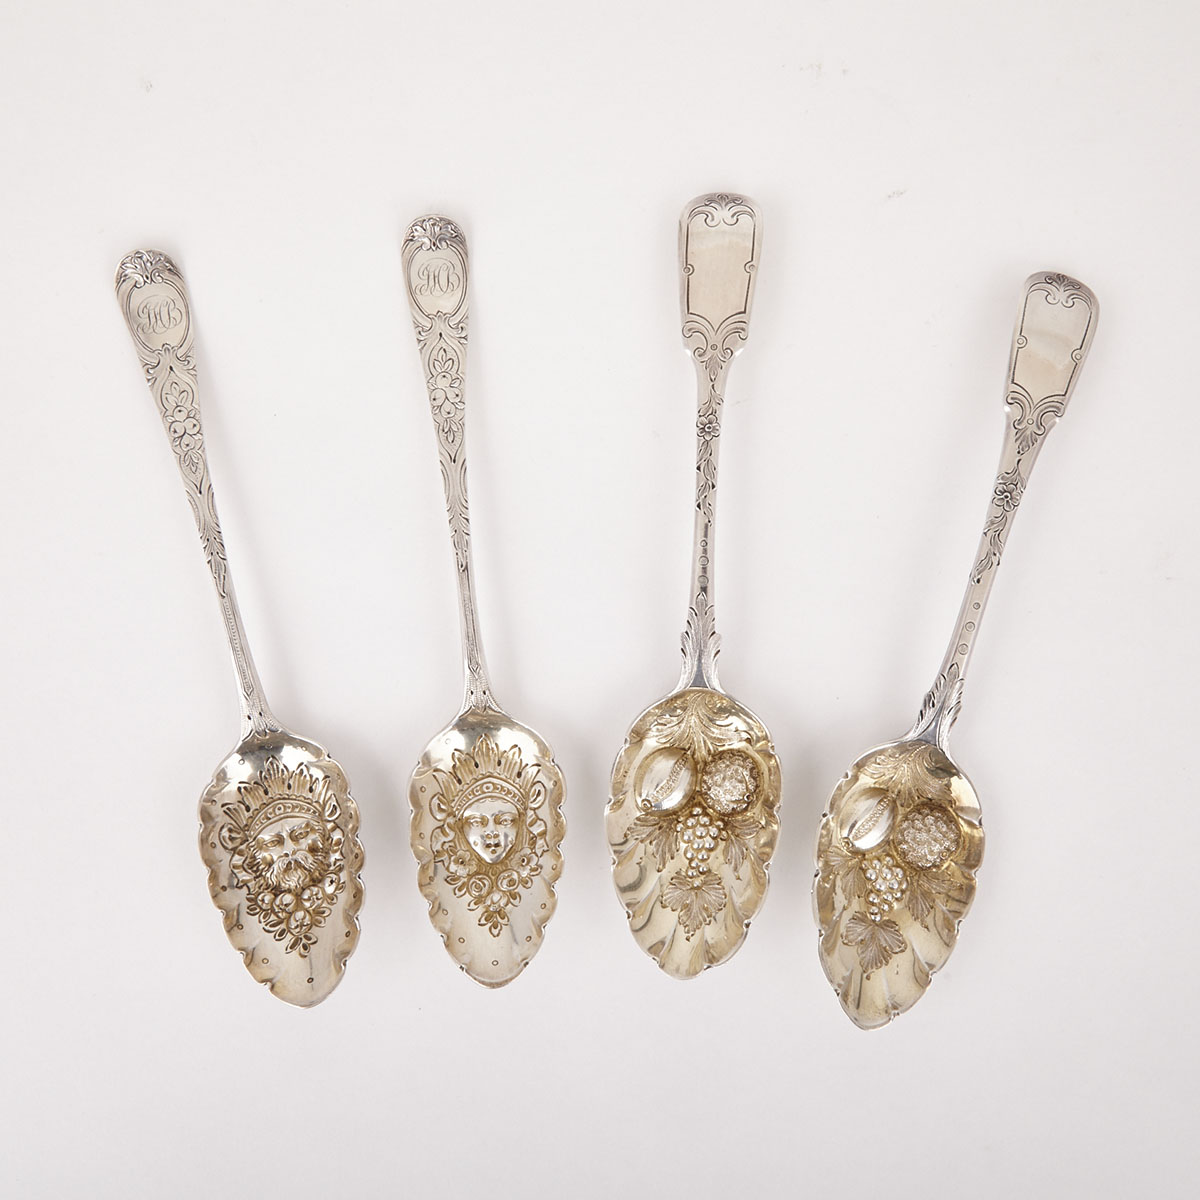 Four Georgian Silver Berry Spoons, London, 1802-28